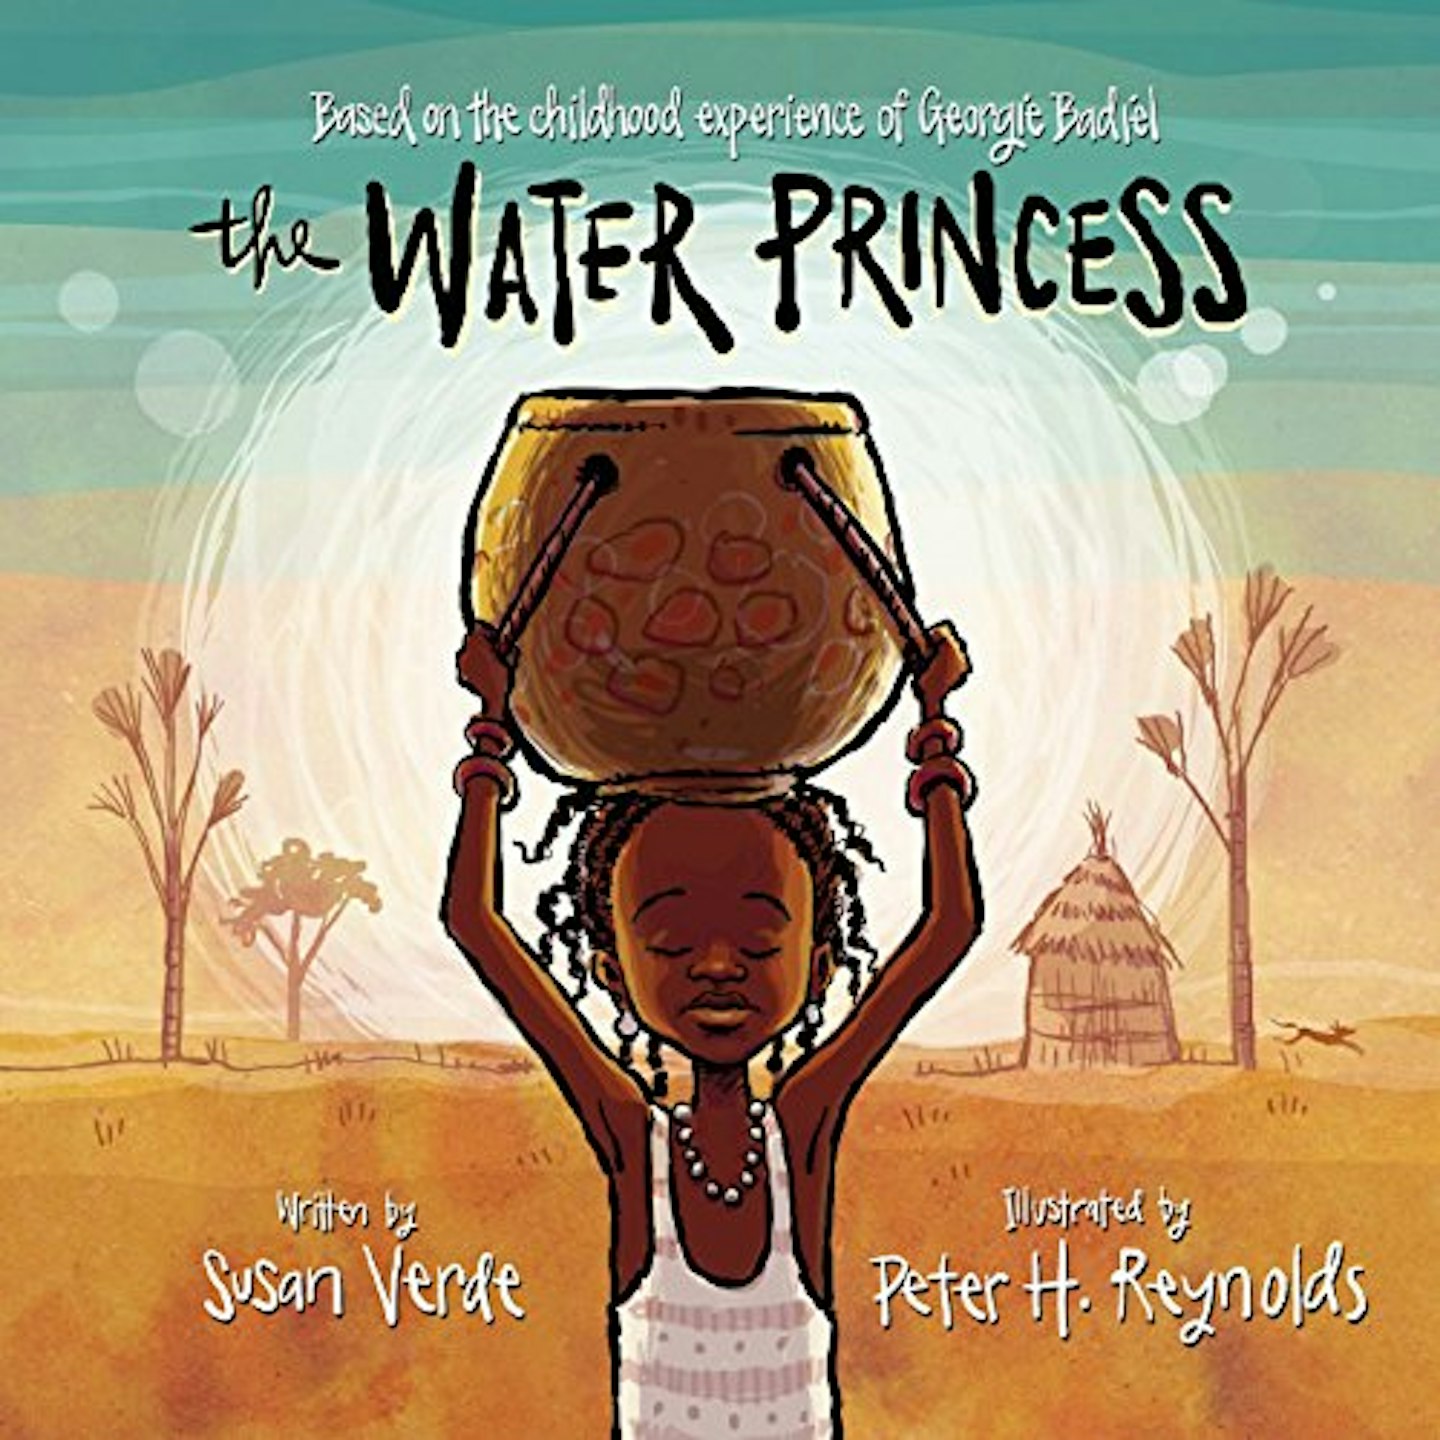 The Water Princess by Georgie Badiel